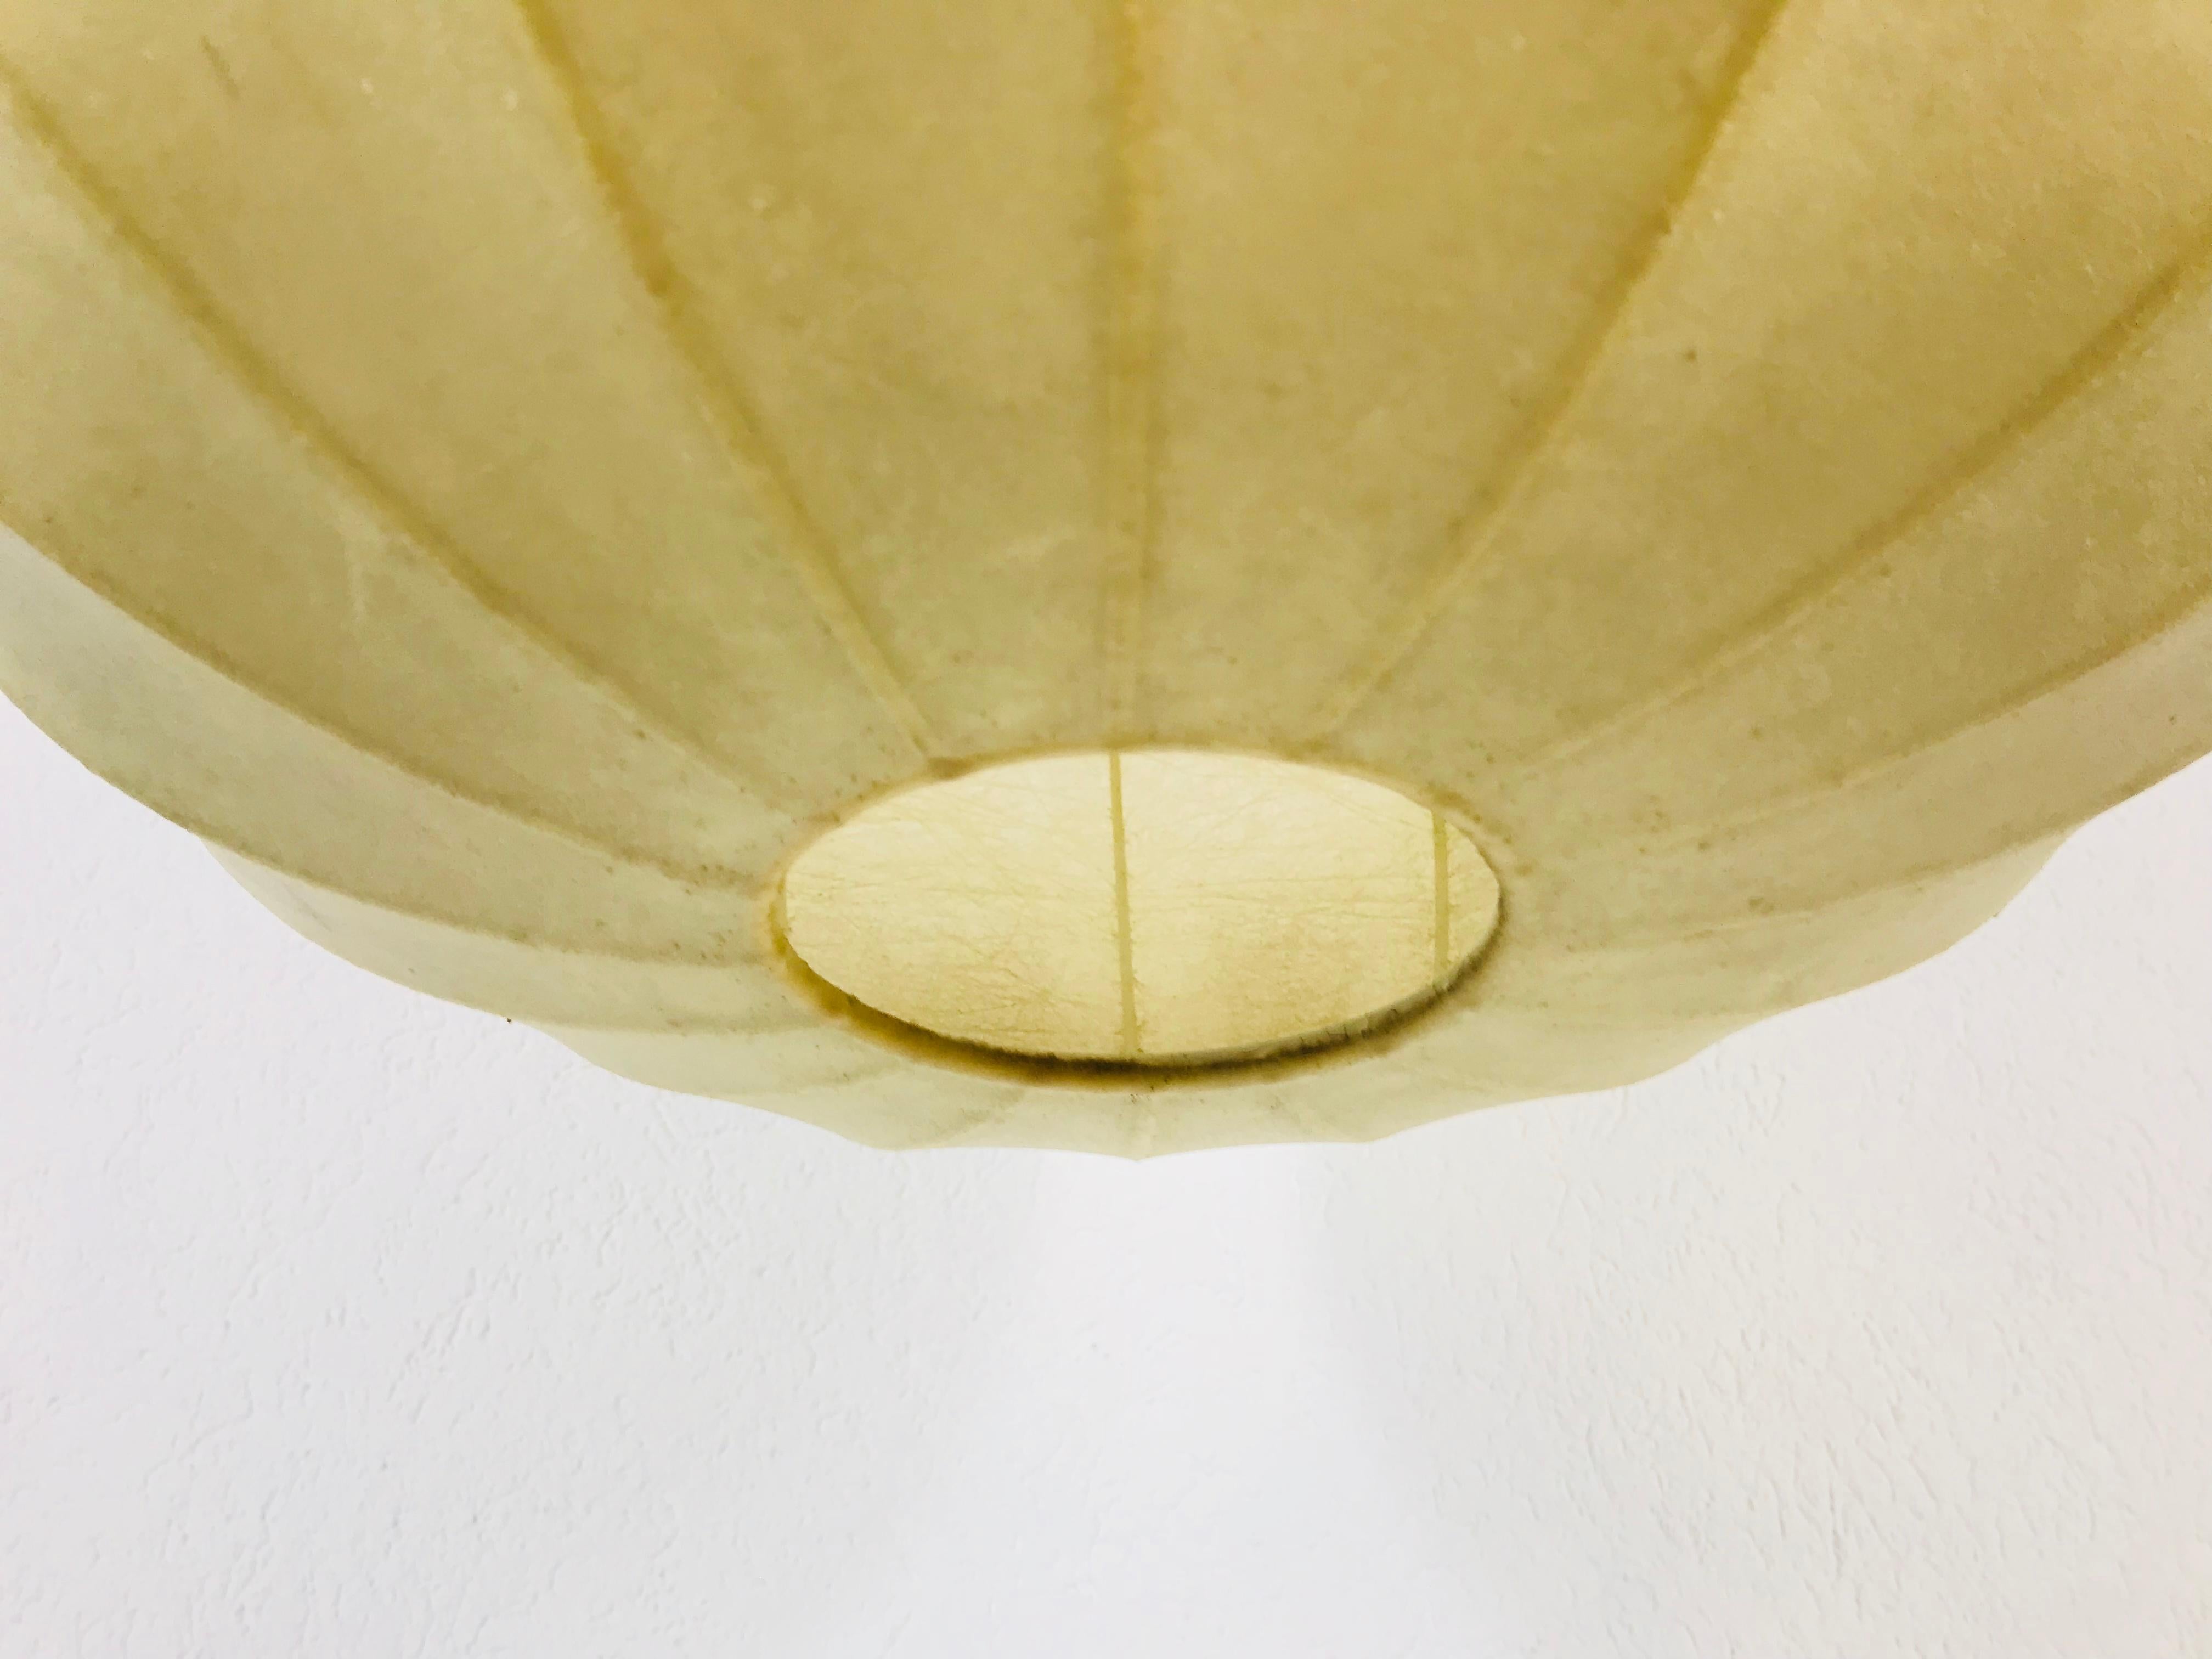 Mid-Century Modern Round Cocoon Pendant Lamp, 1960s, Italy 4